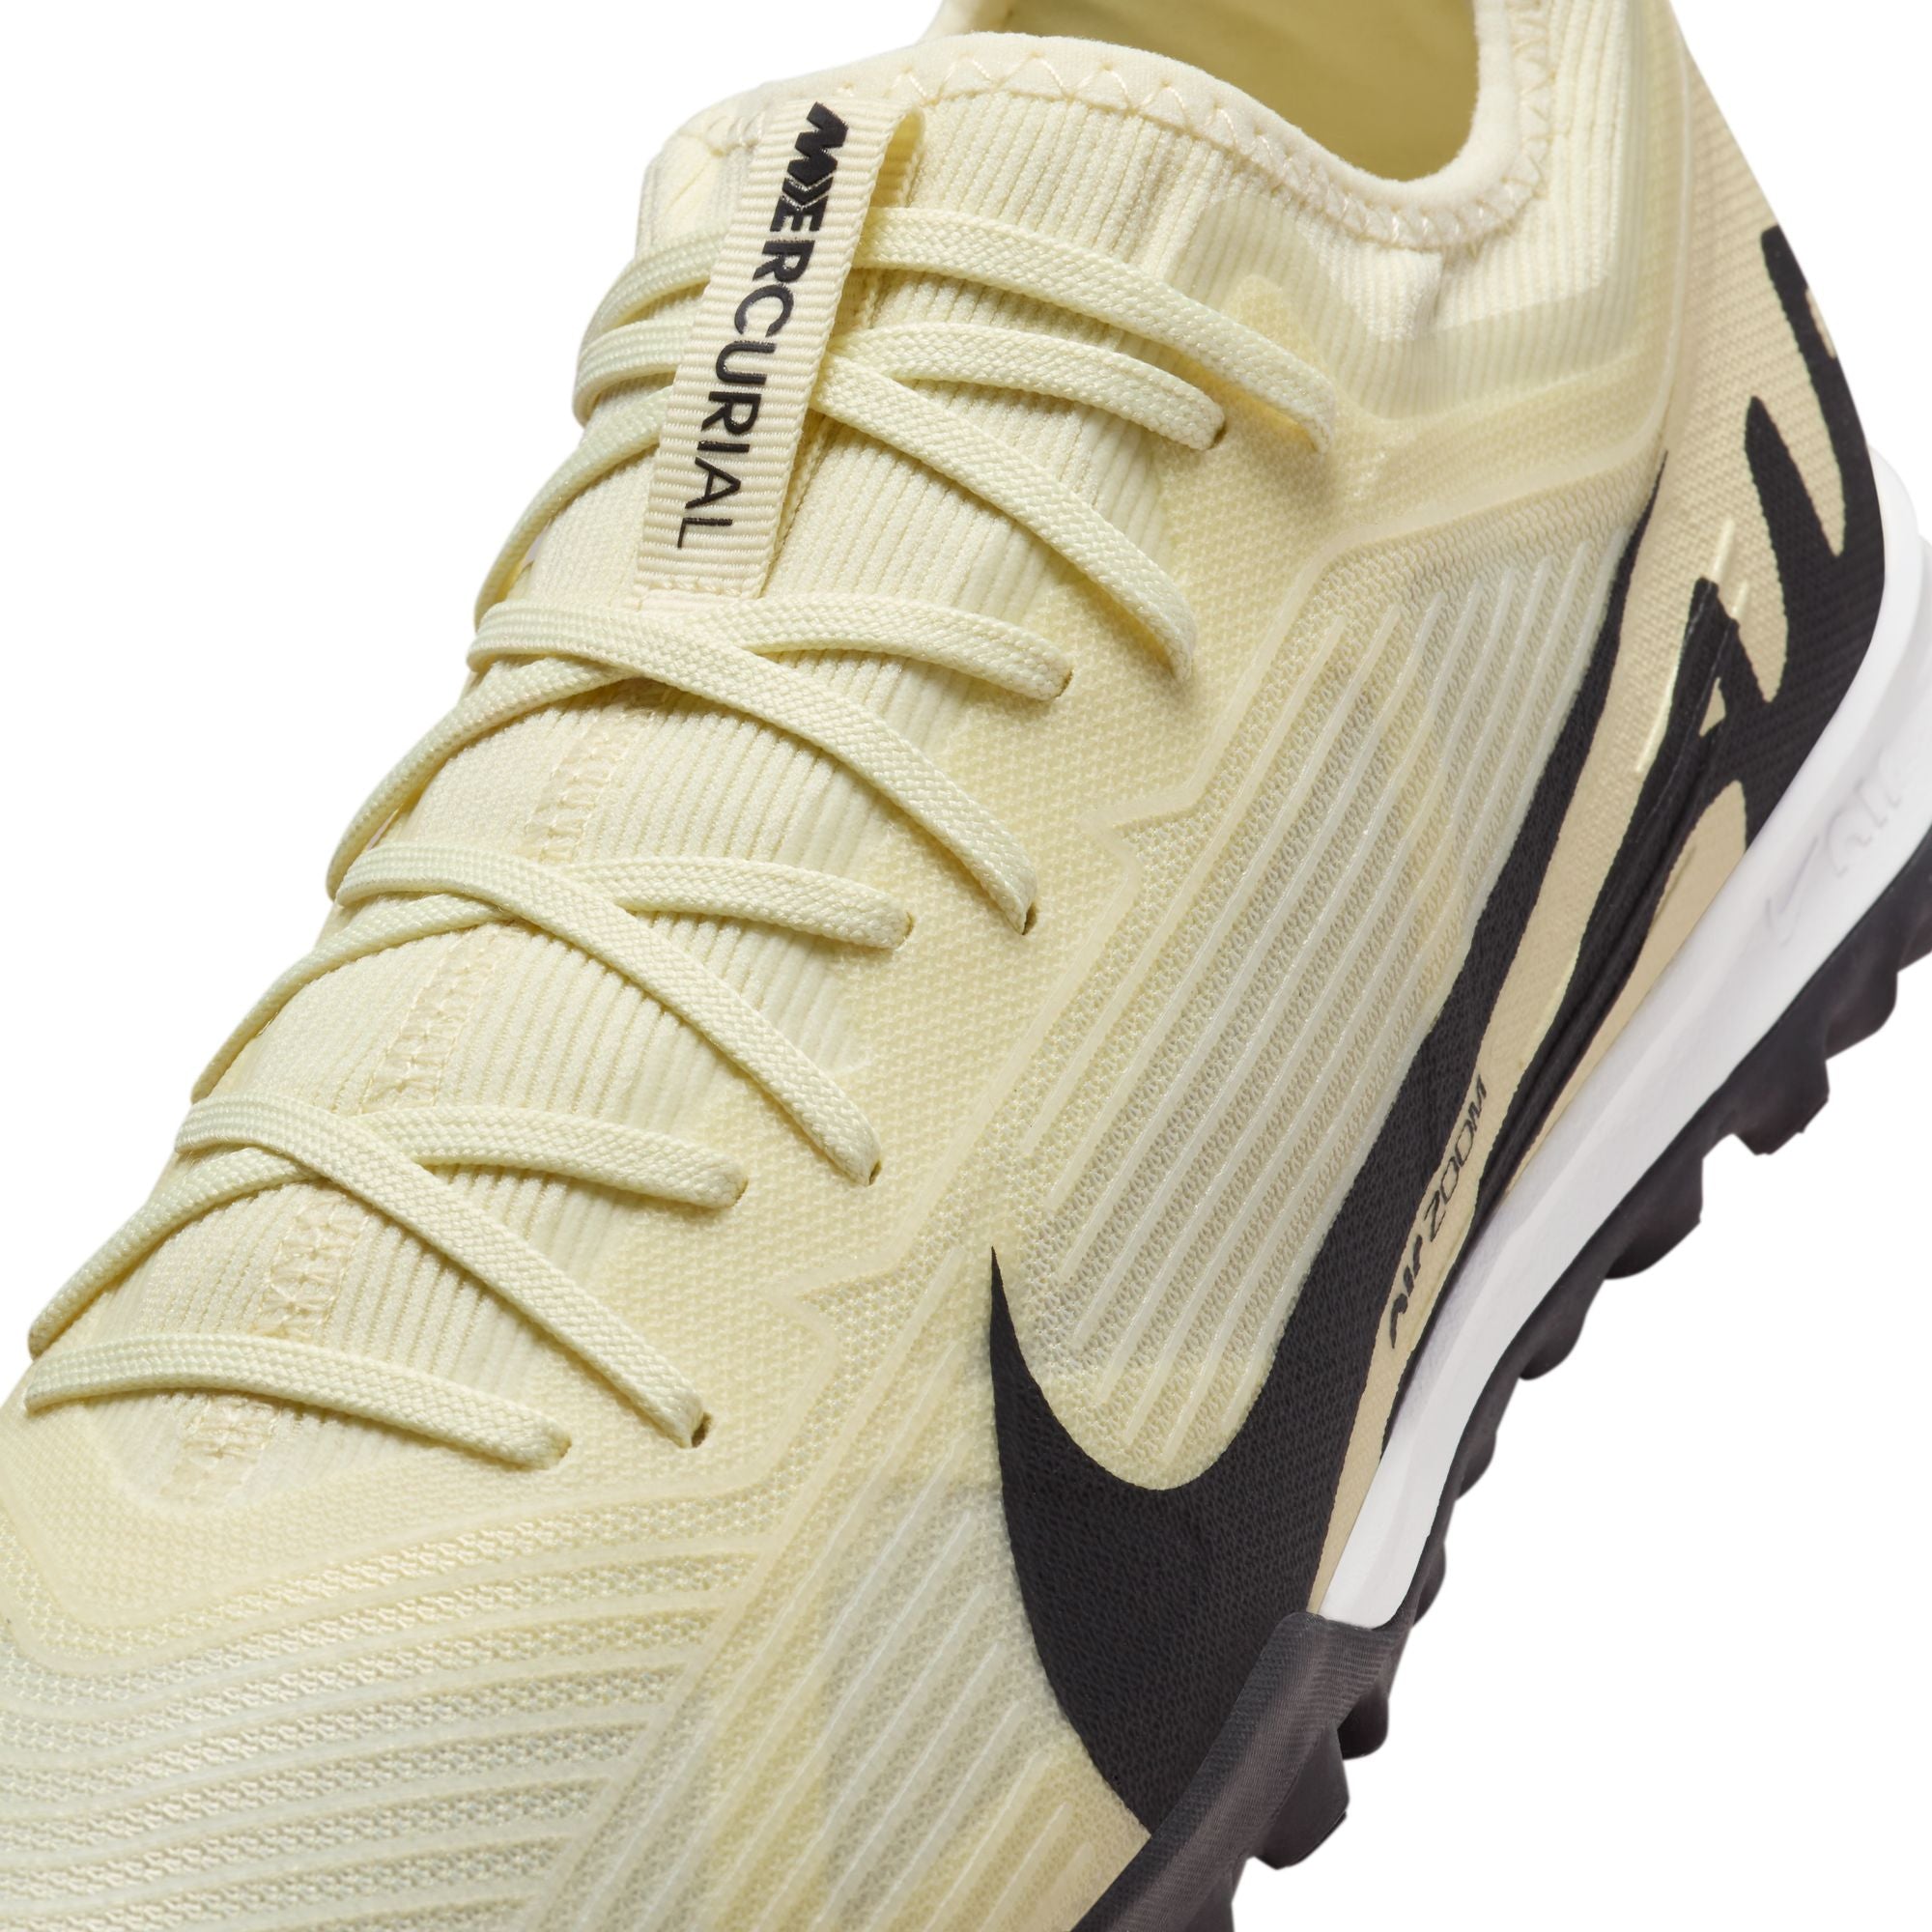 Nike Mercurial Vapor 15 Pro Turf Low-Top Soccer Shoes